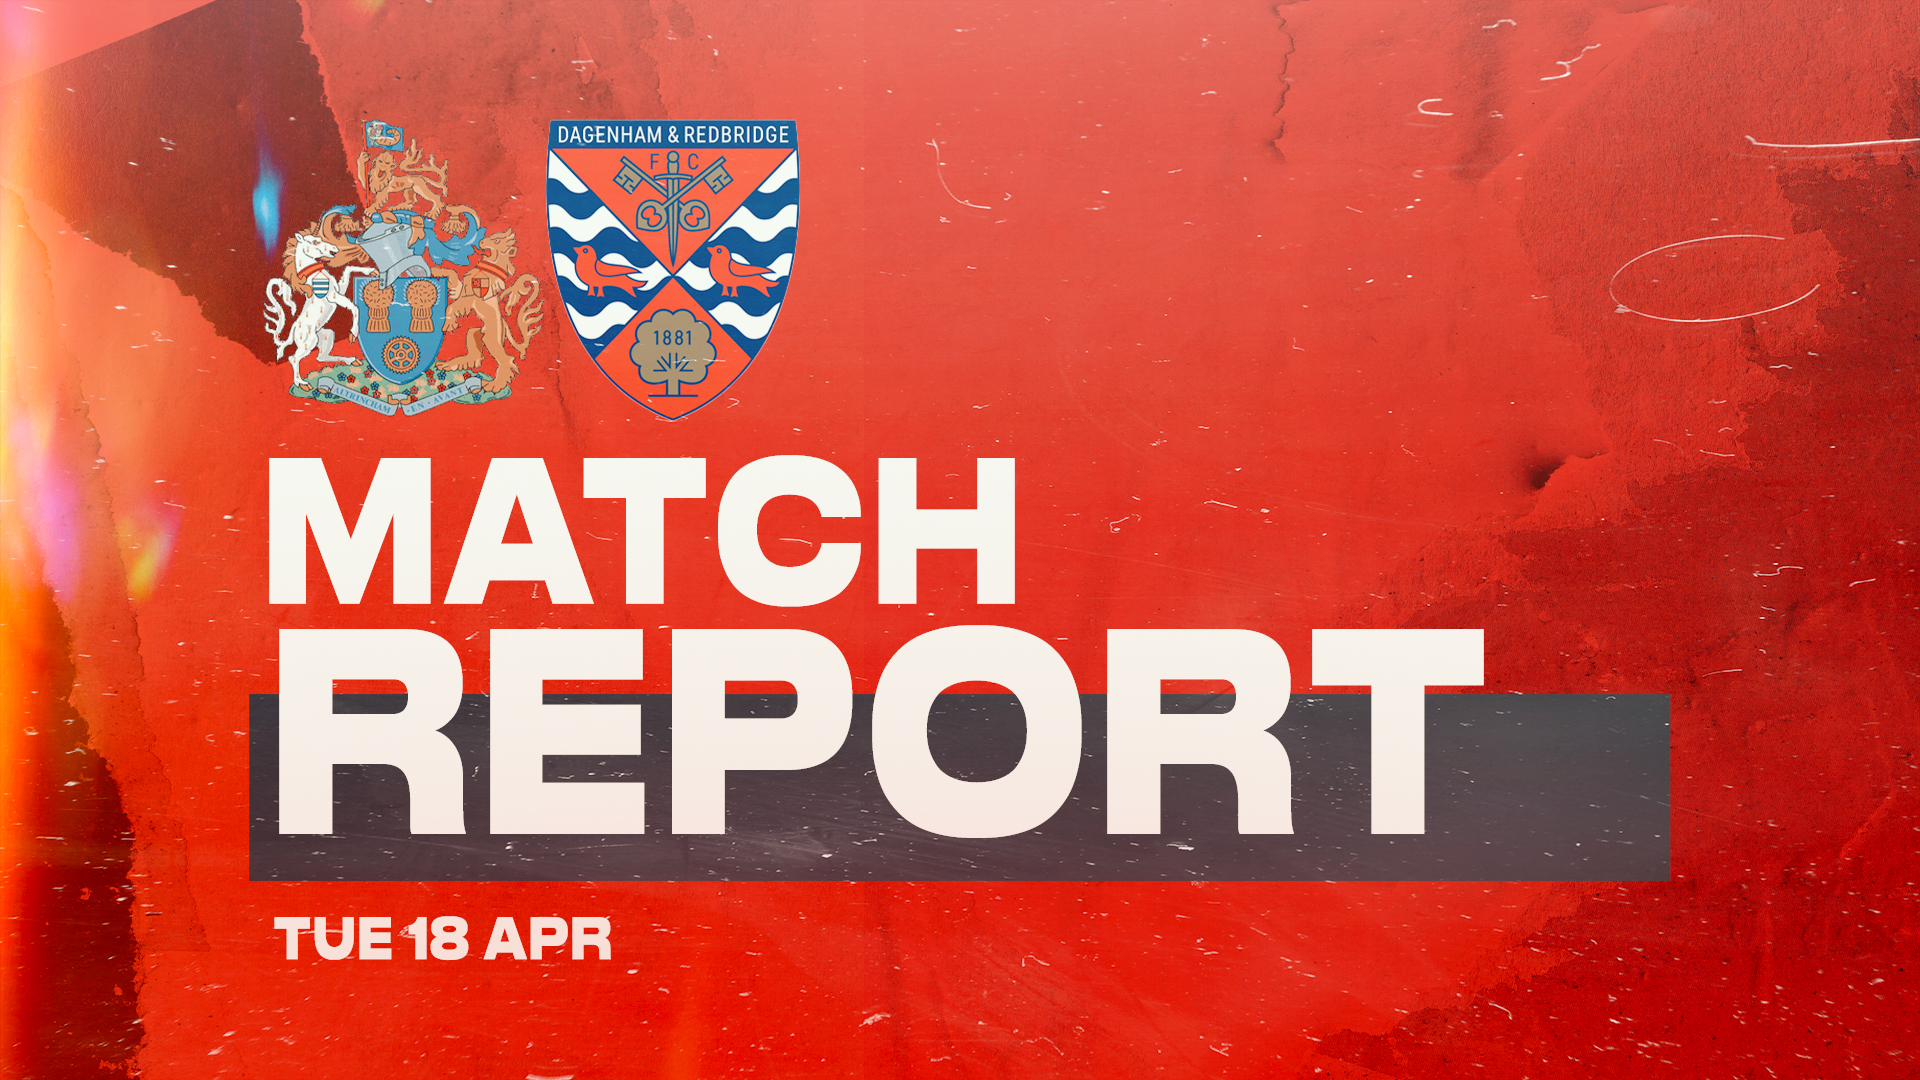 Match report: Altrincham 2, Southend United 0